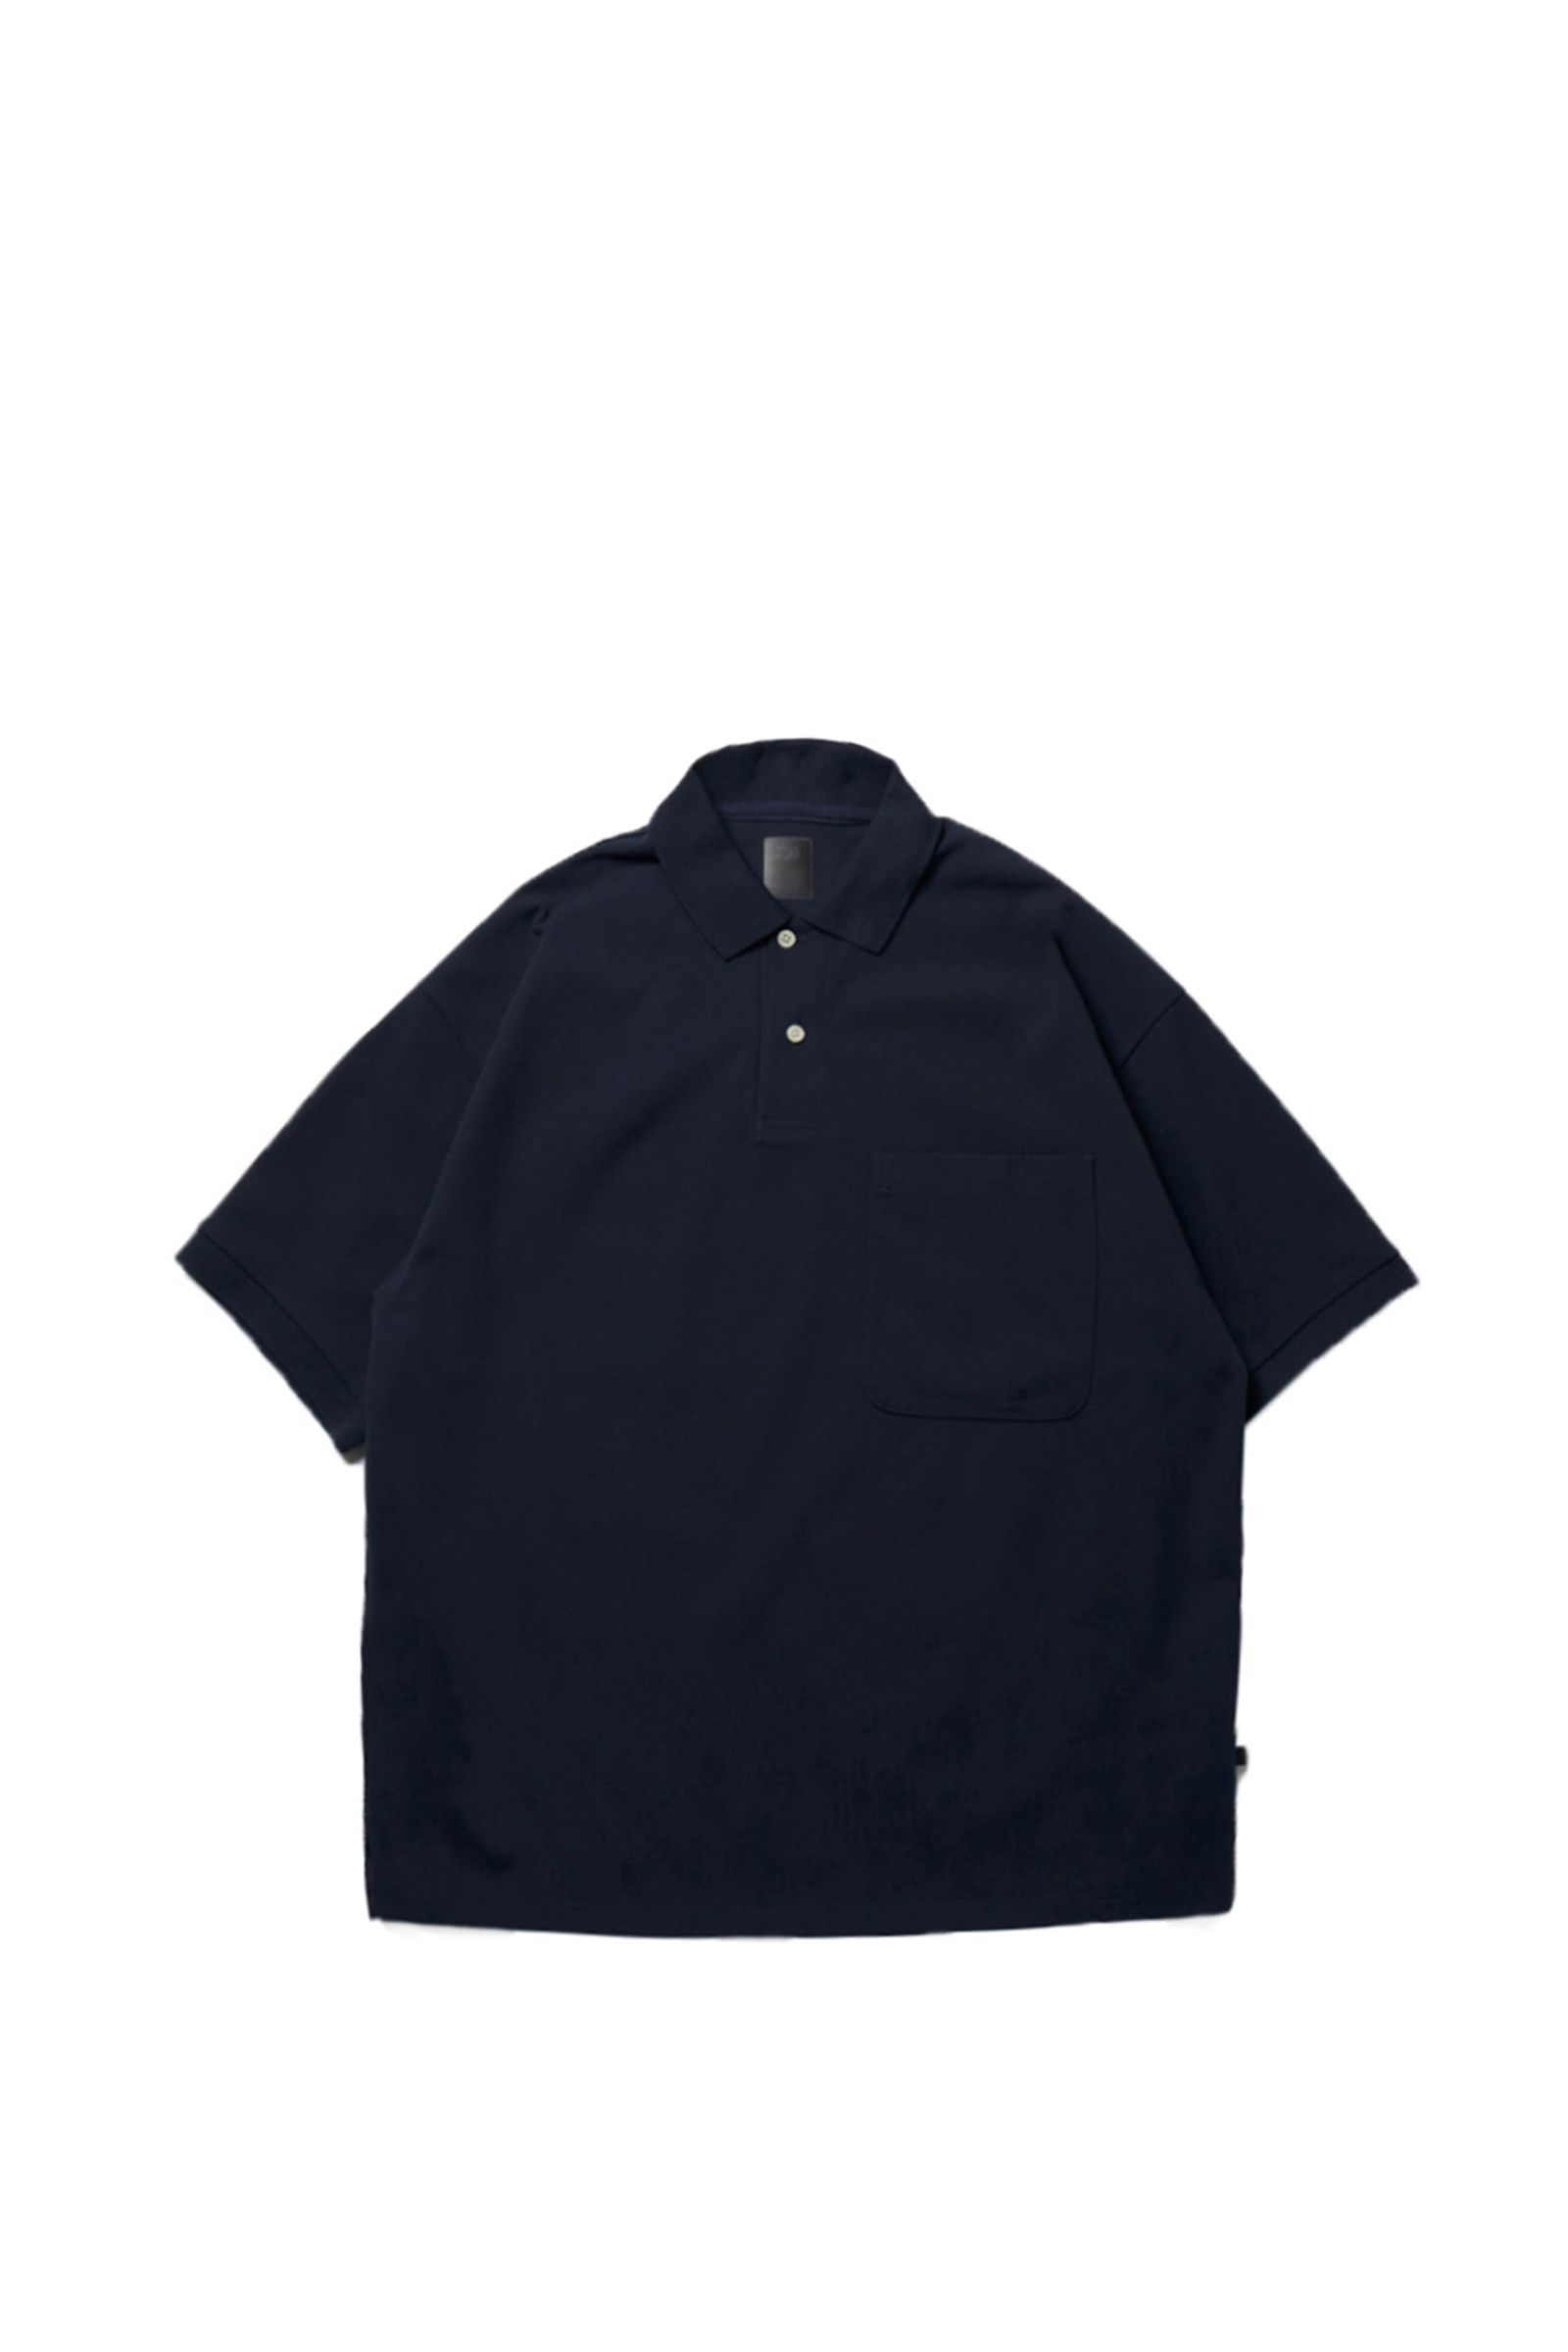 daiwa pier39 tech polo s/s XL ブラック ポロシャツ